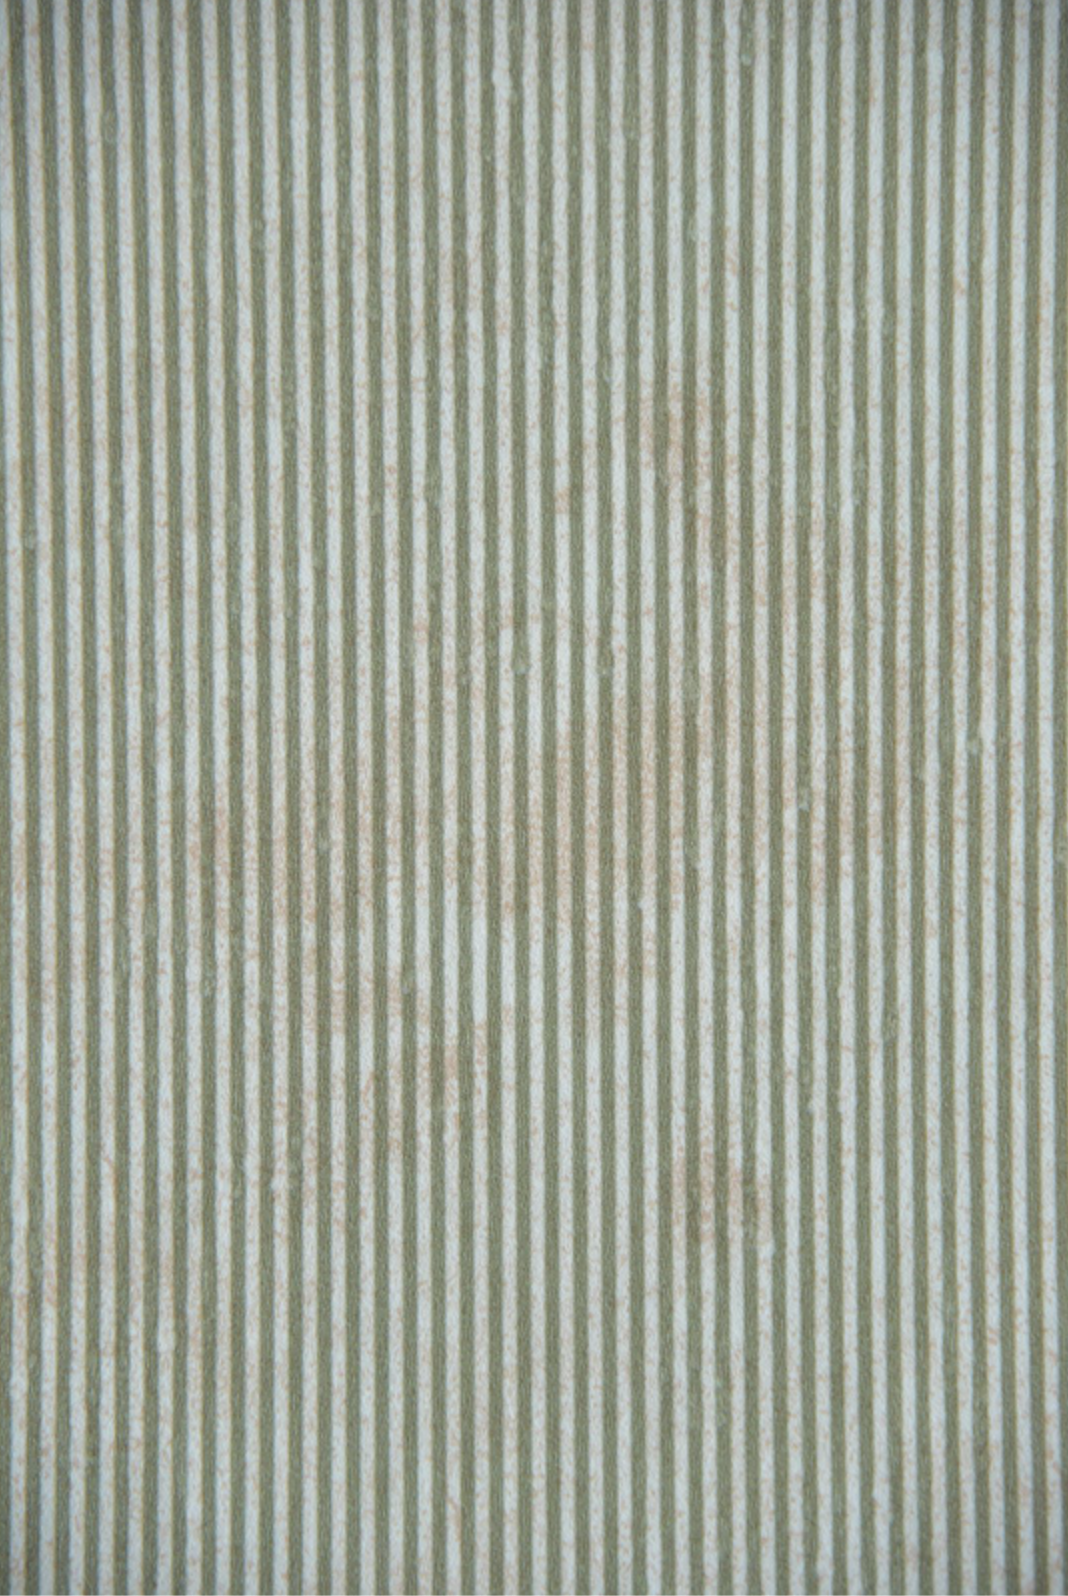 [700276] Wallpaper / wall paper  - Narrow striped - Dusty green